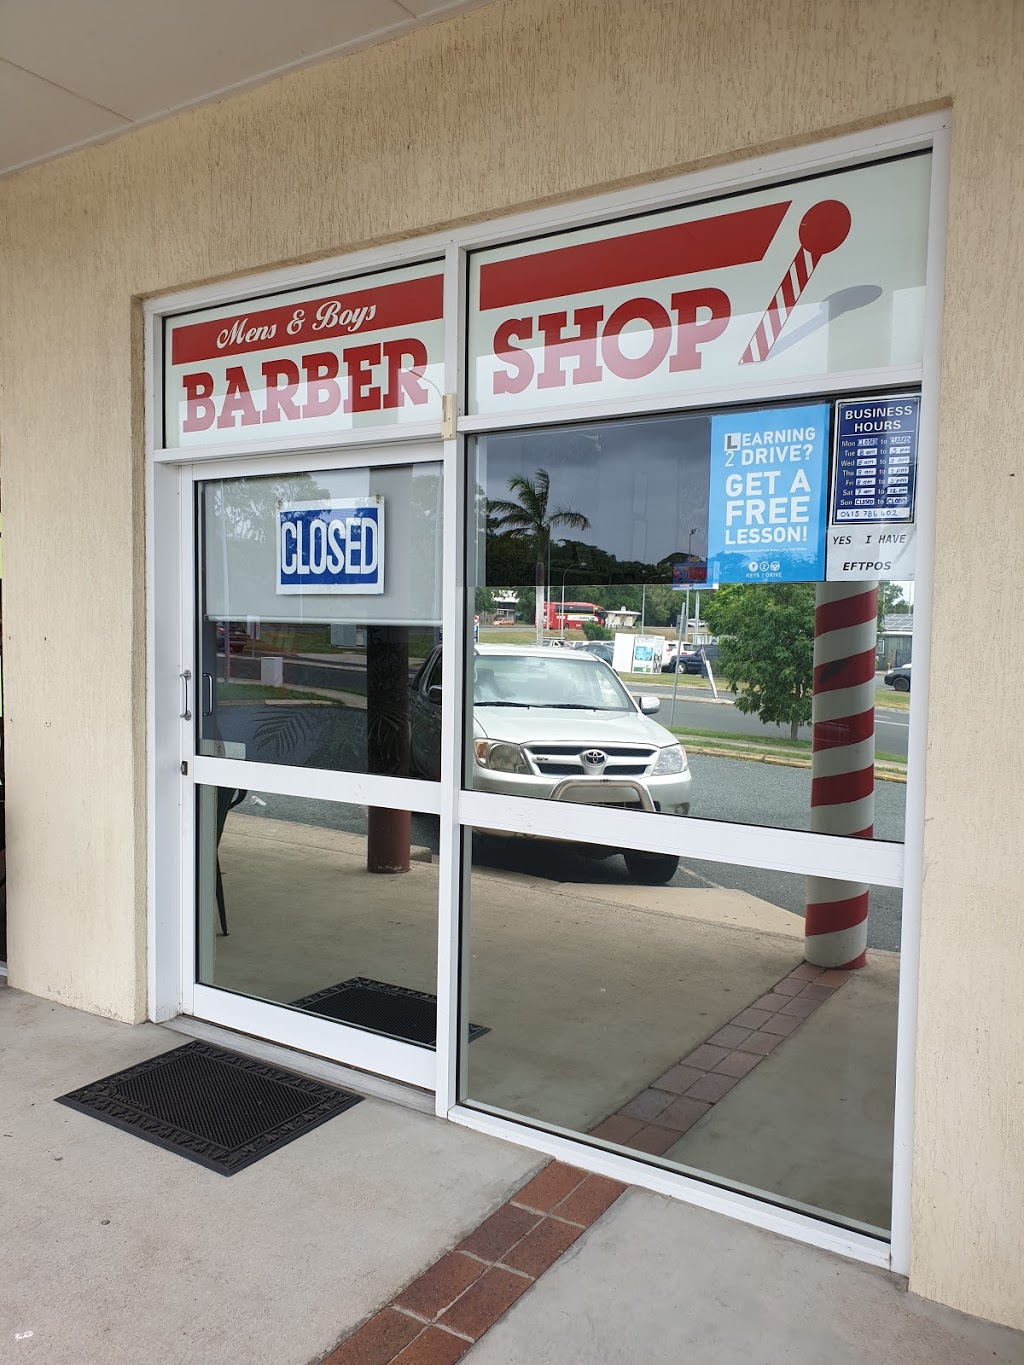 Cornes Barber Shop | 3 Rosewood Dr, Rural View QLD 4740, Australia | Phone: 0415 786 402